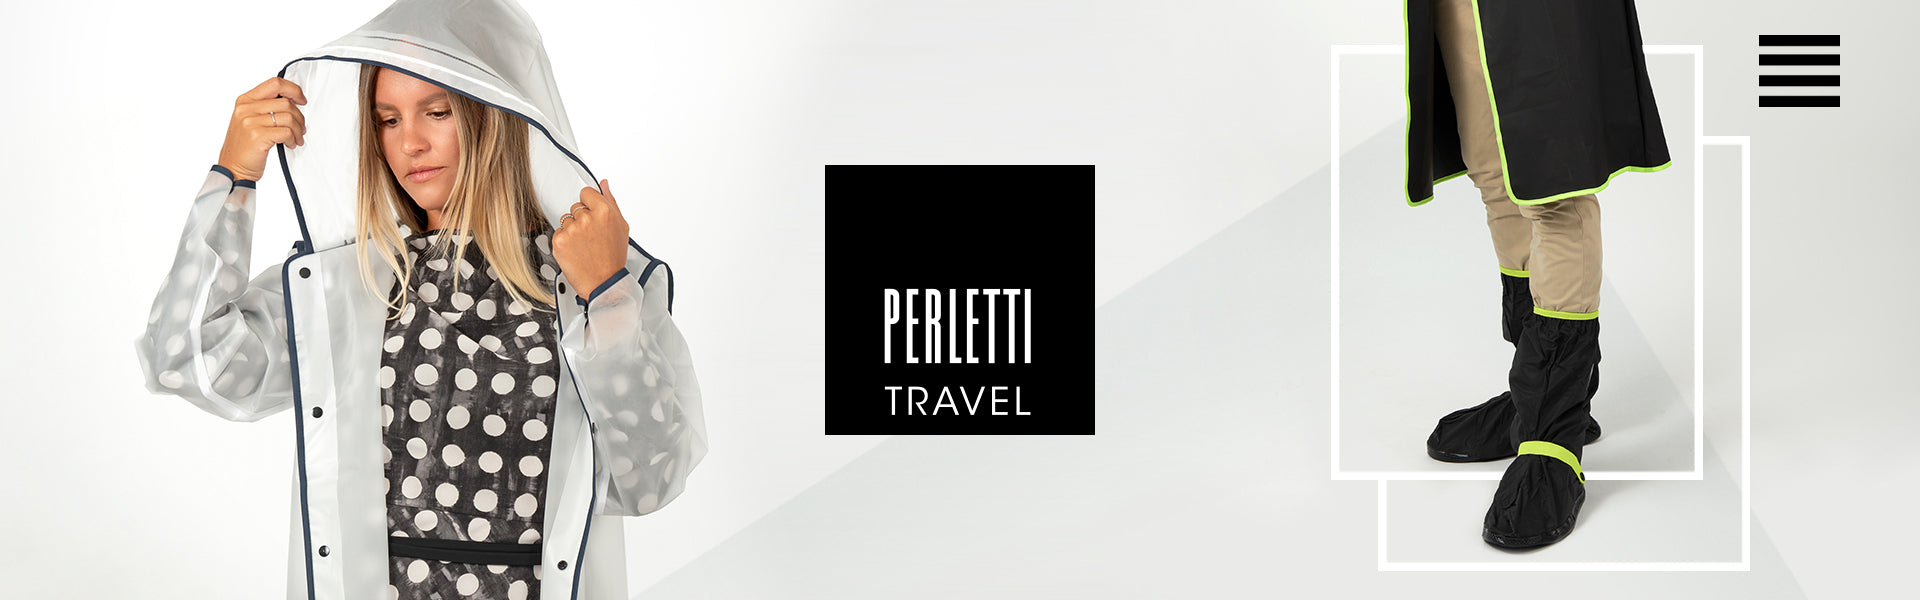 Perletti Travel